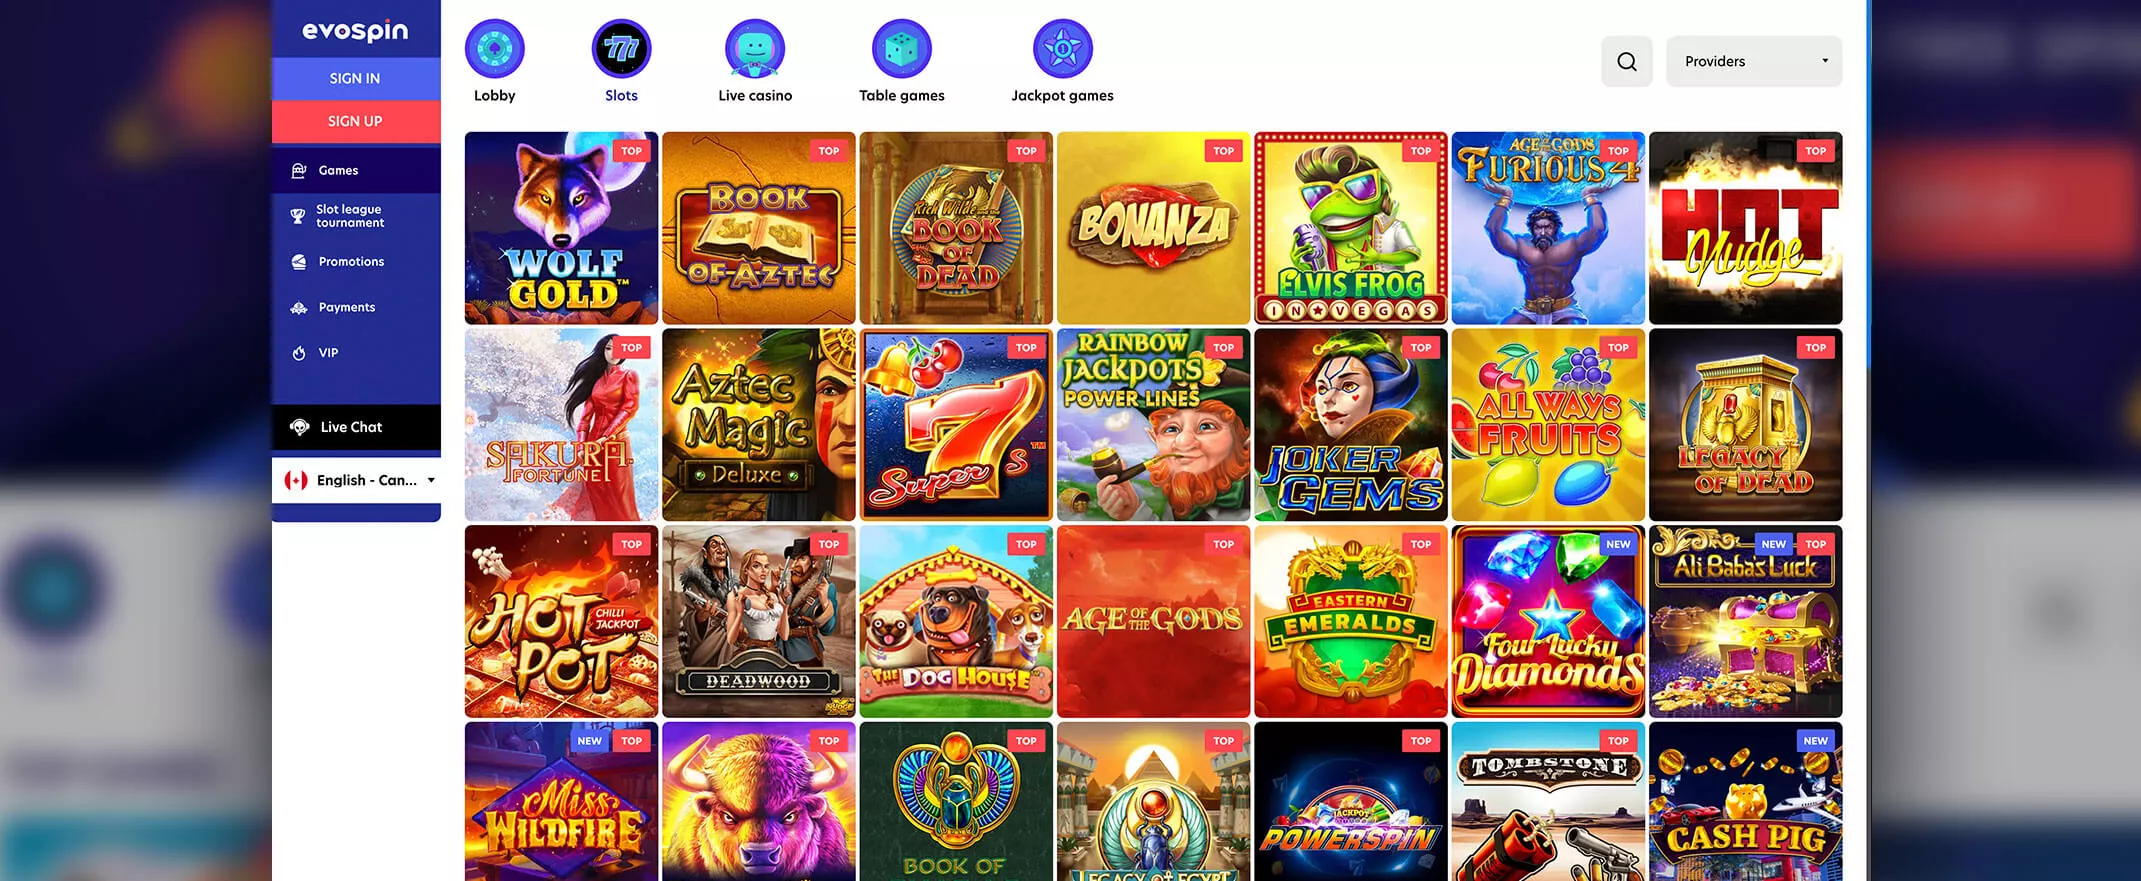 Evospin casino screenshot of the games